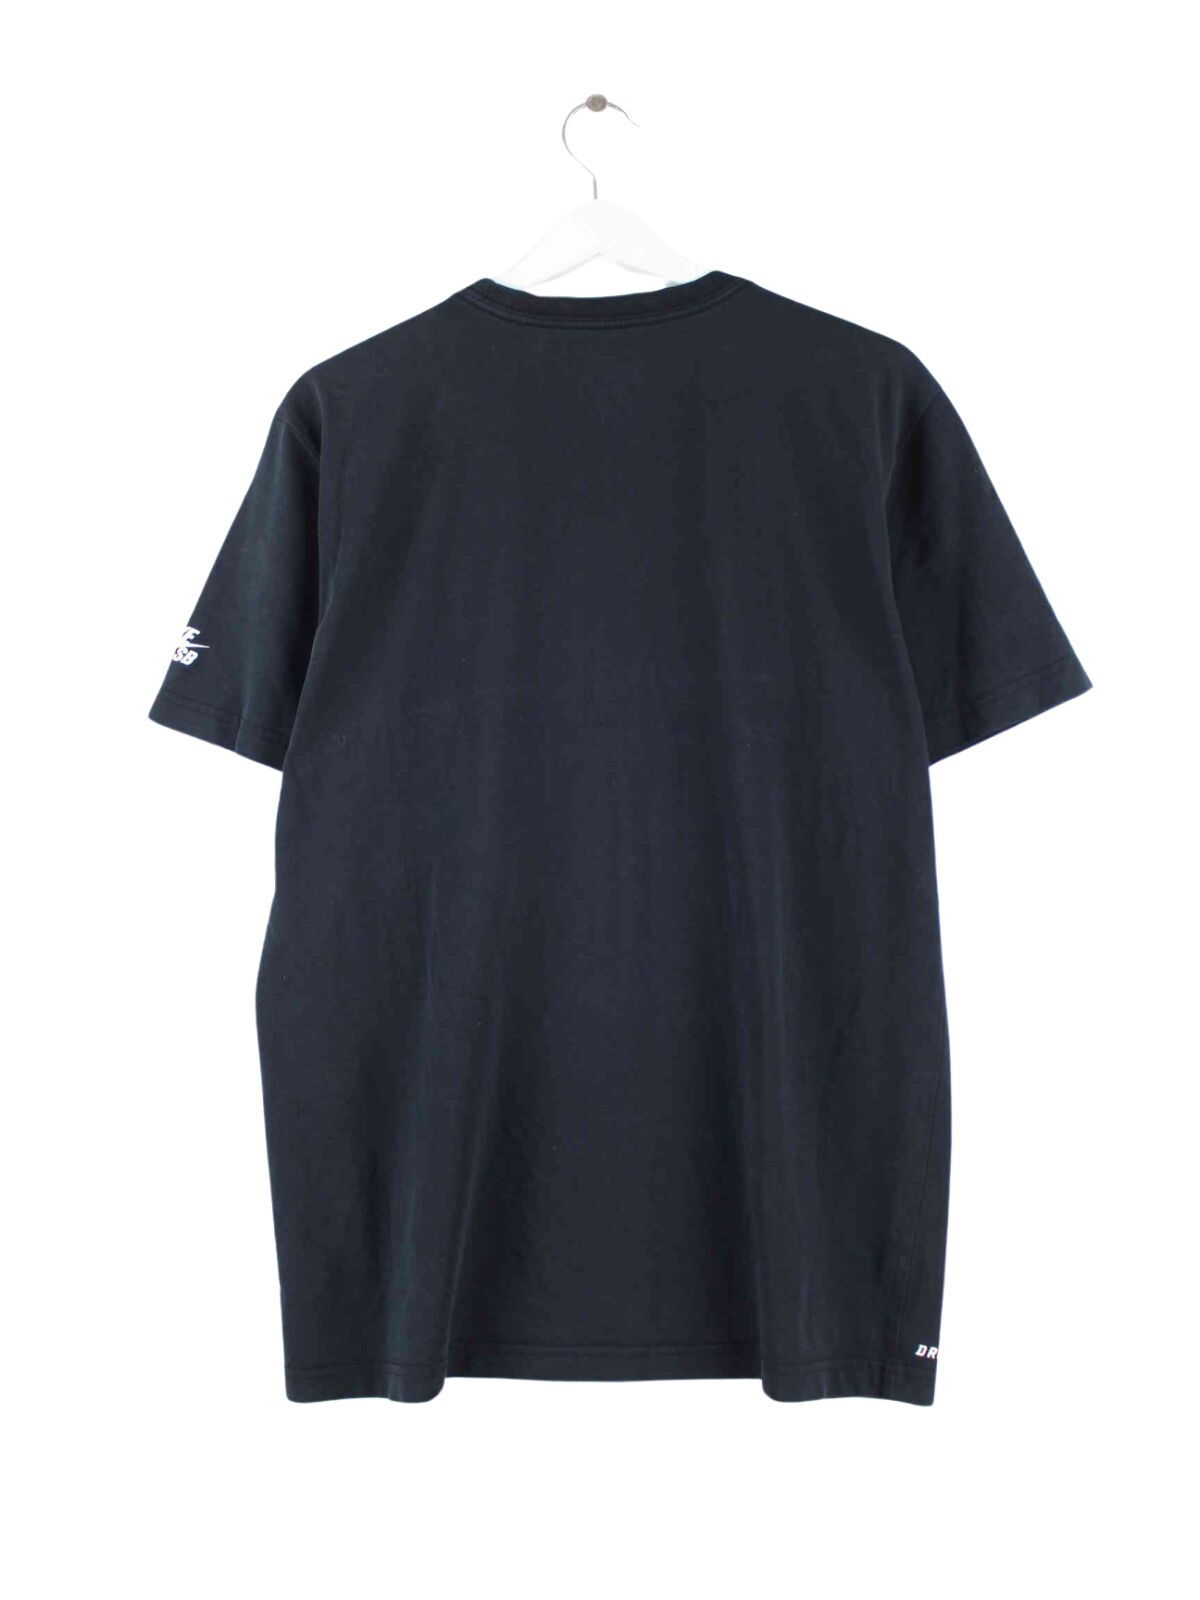 Nike Print Kurzarm T-Shirt Schwarz L (back image)